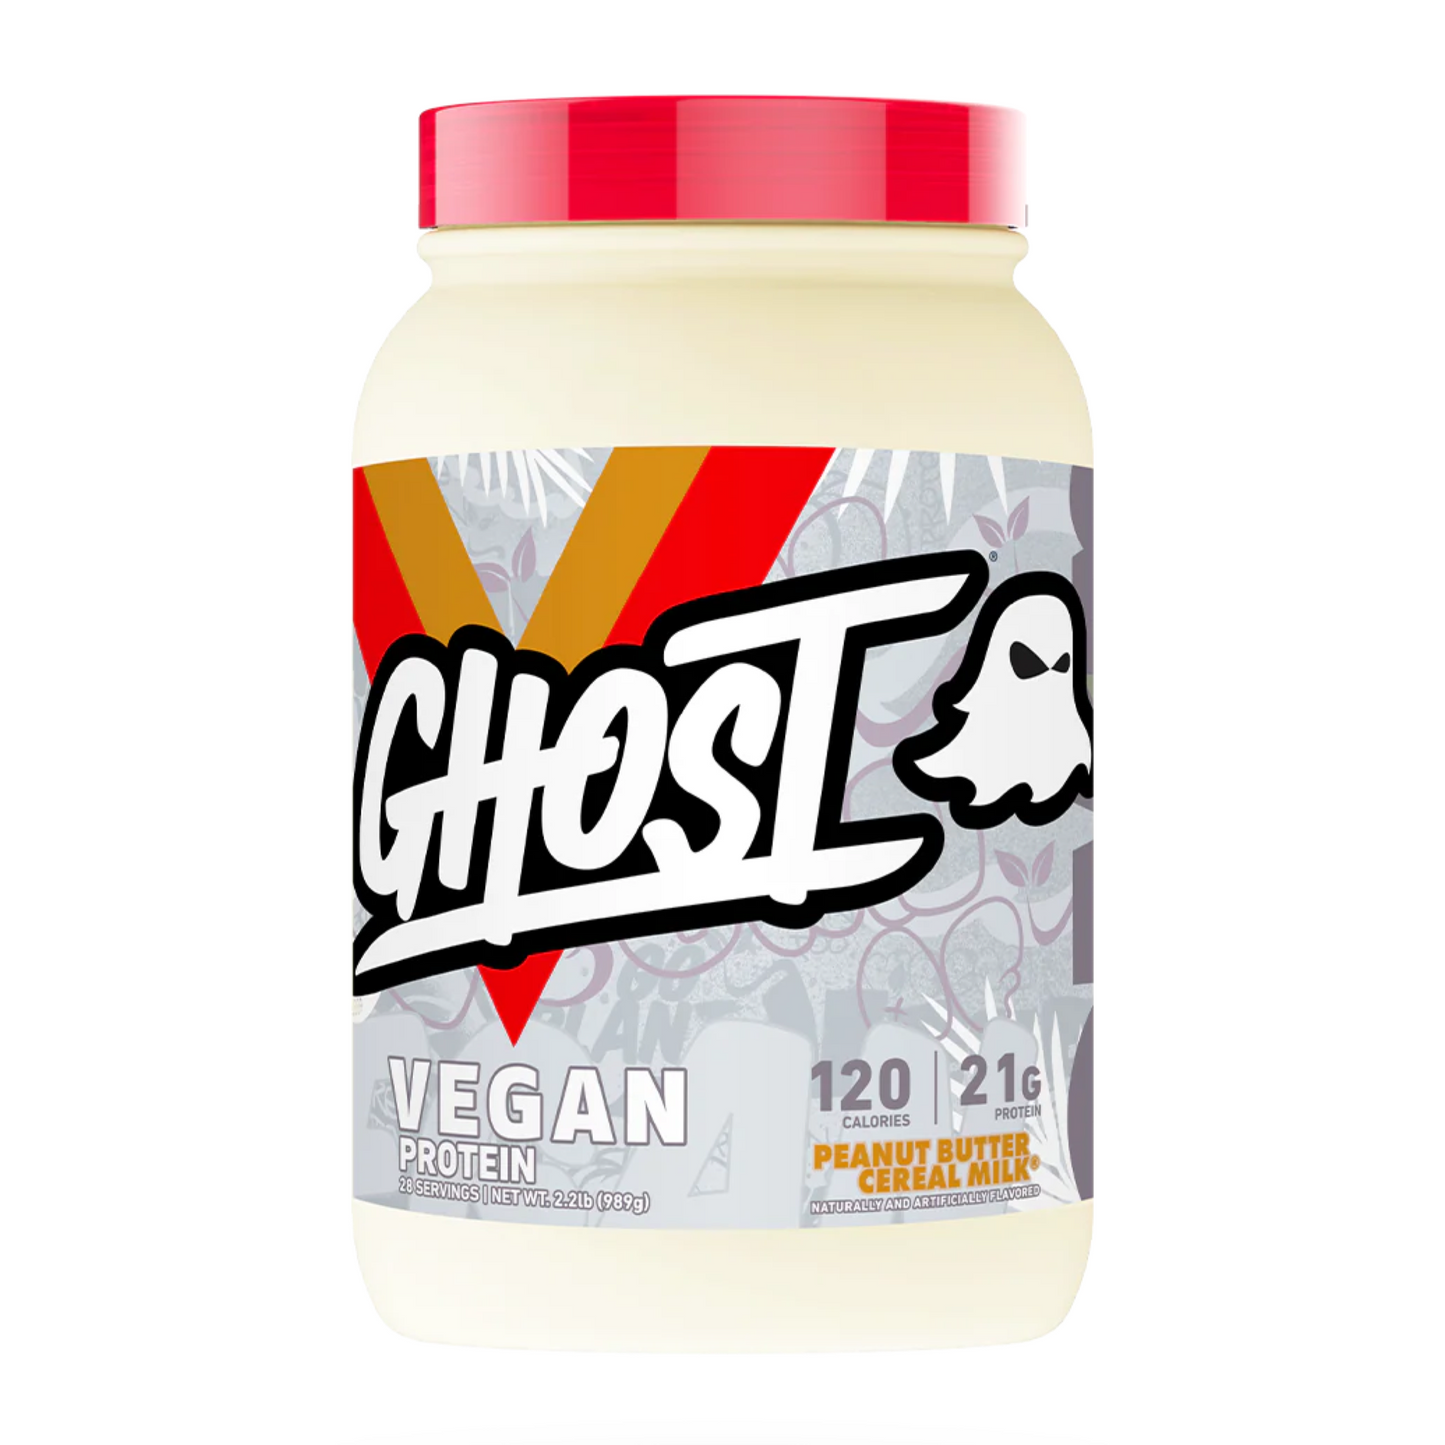 Ghost Vegan 2lb Peanut Butter Cereal Milk